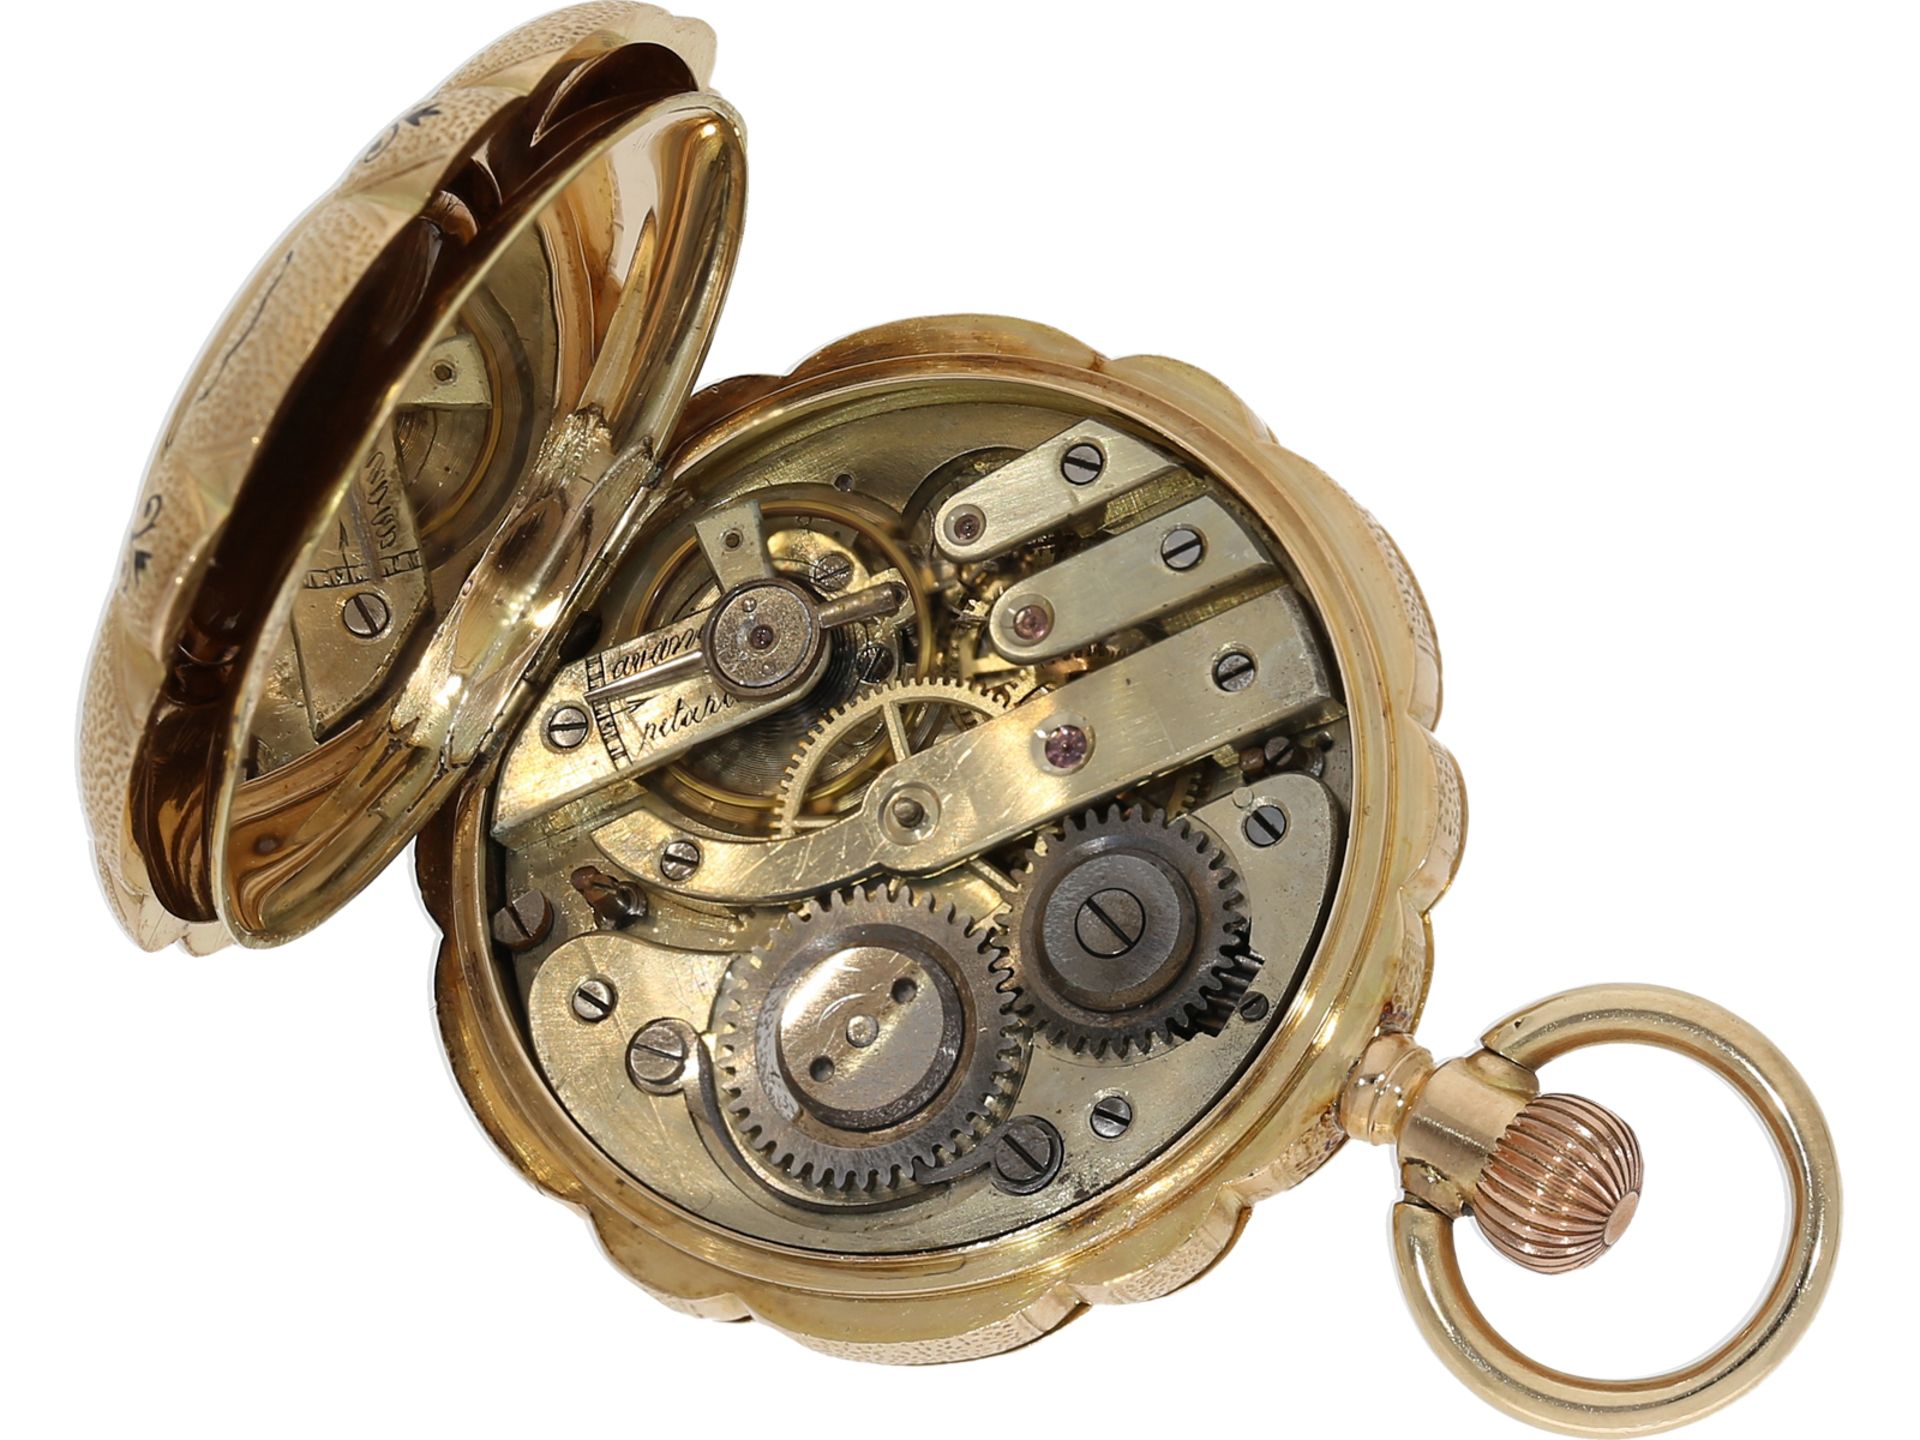 Pocket watch: gold/enamel splendour hunting case watch set with diamonds, Monard Geneve, ca. 1870 - Image 4 of 8